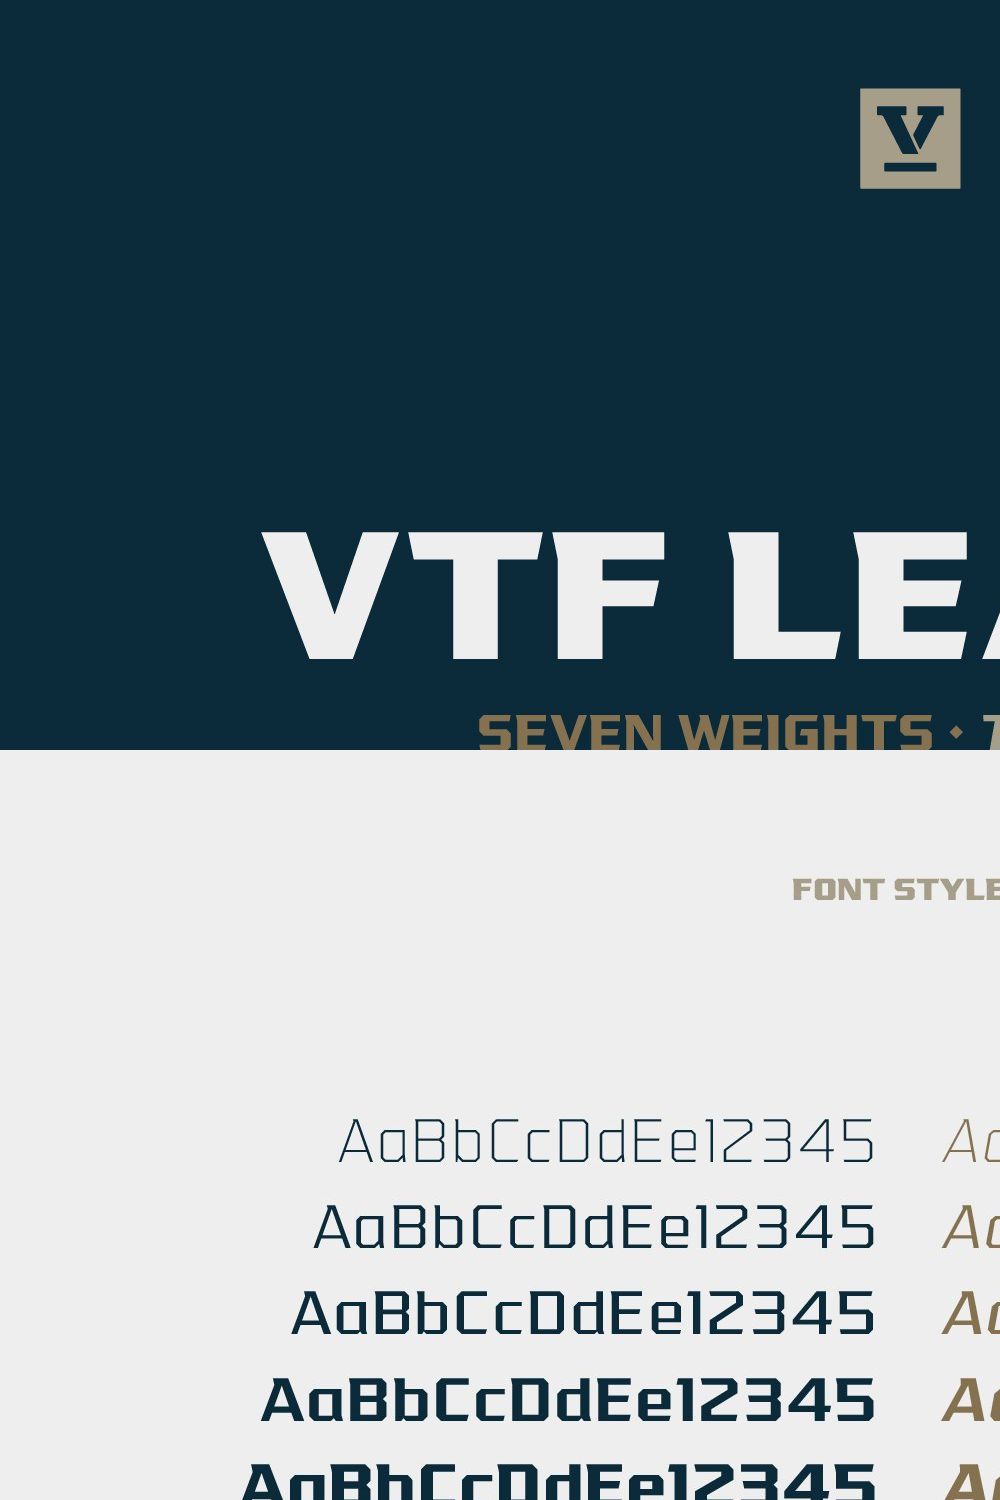 VTF League Family pinterest preview image.